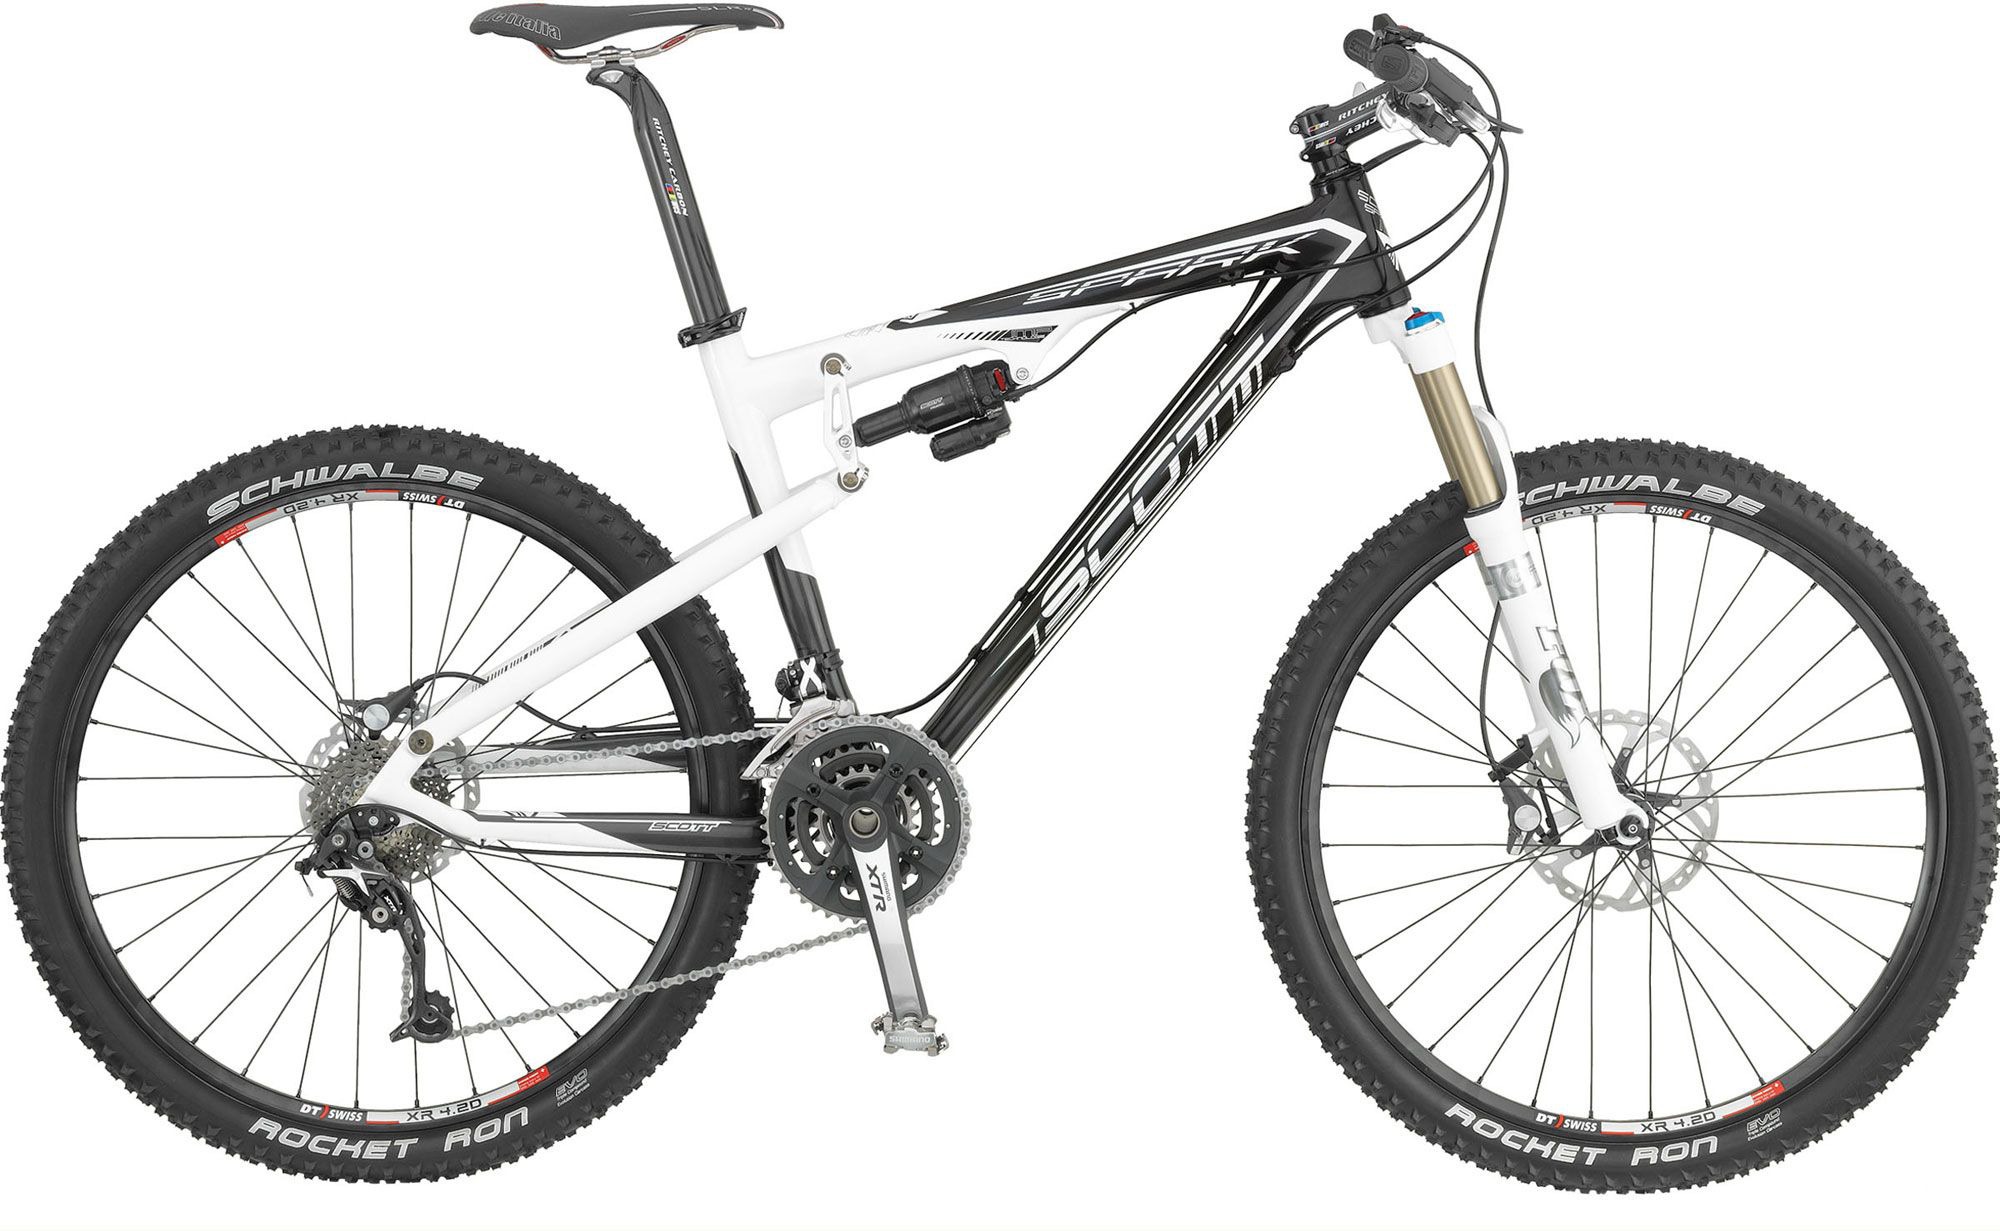 2009 Scott Spark 10 - Bicycle Details 